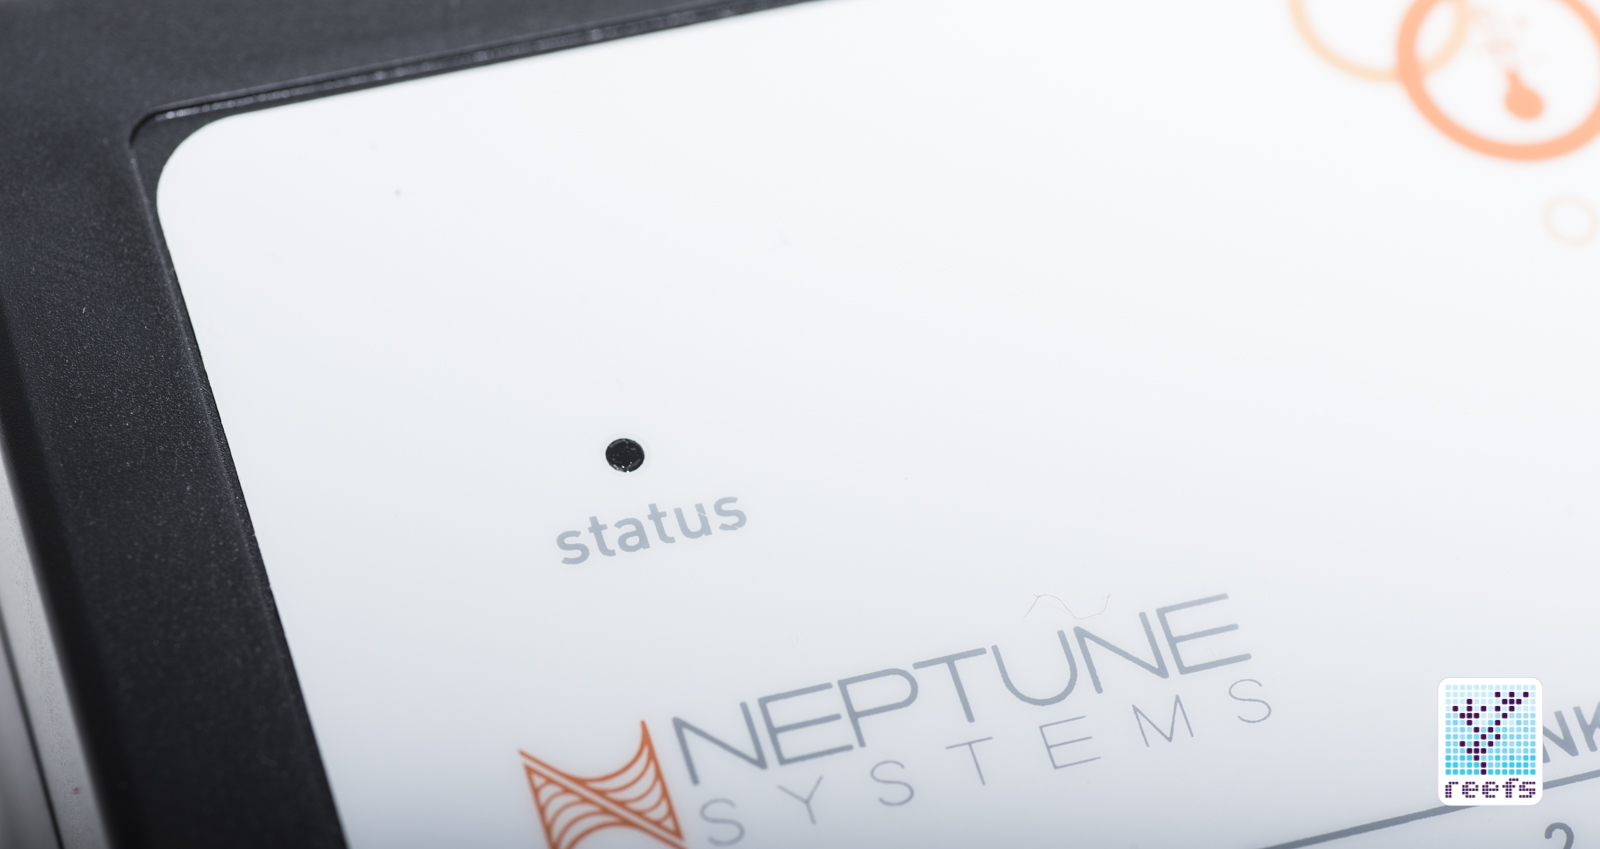 Neptune Systems WAV